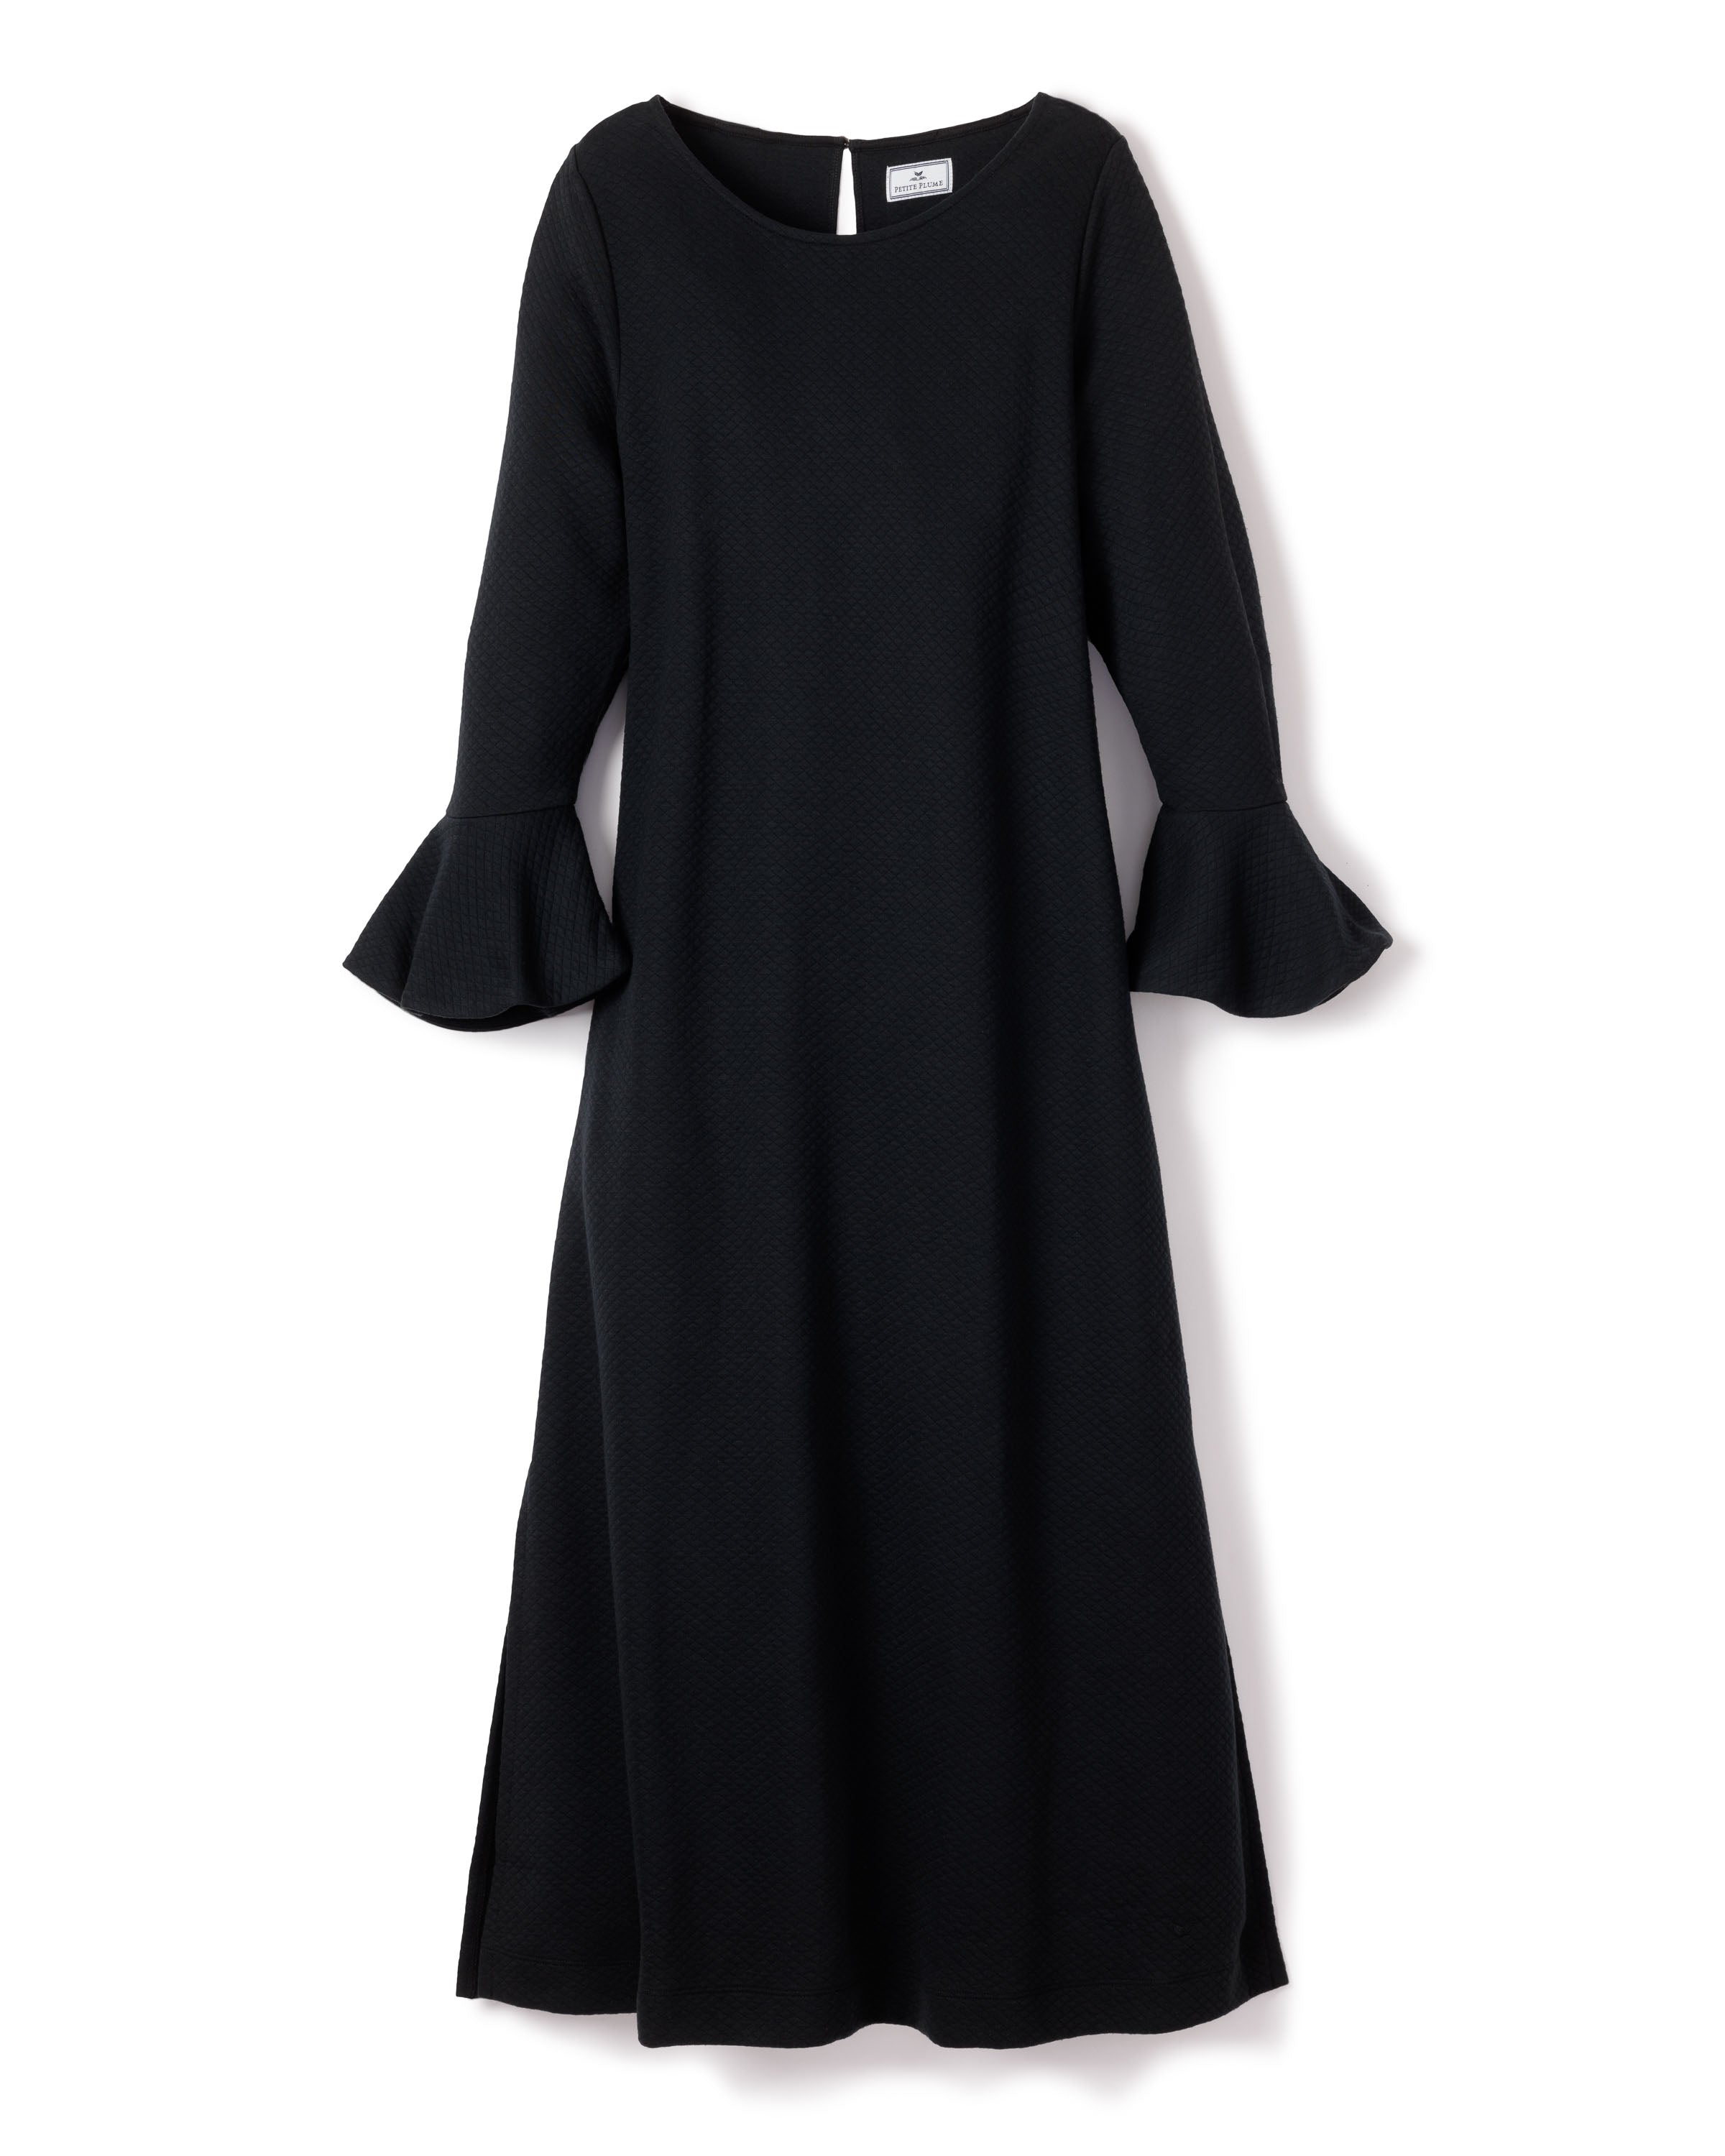 Women's Pima Ophelia Nightgown in Black